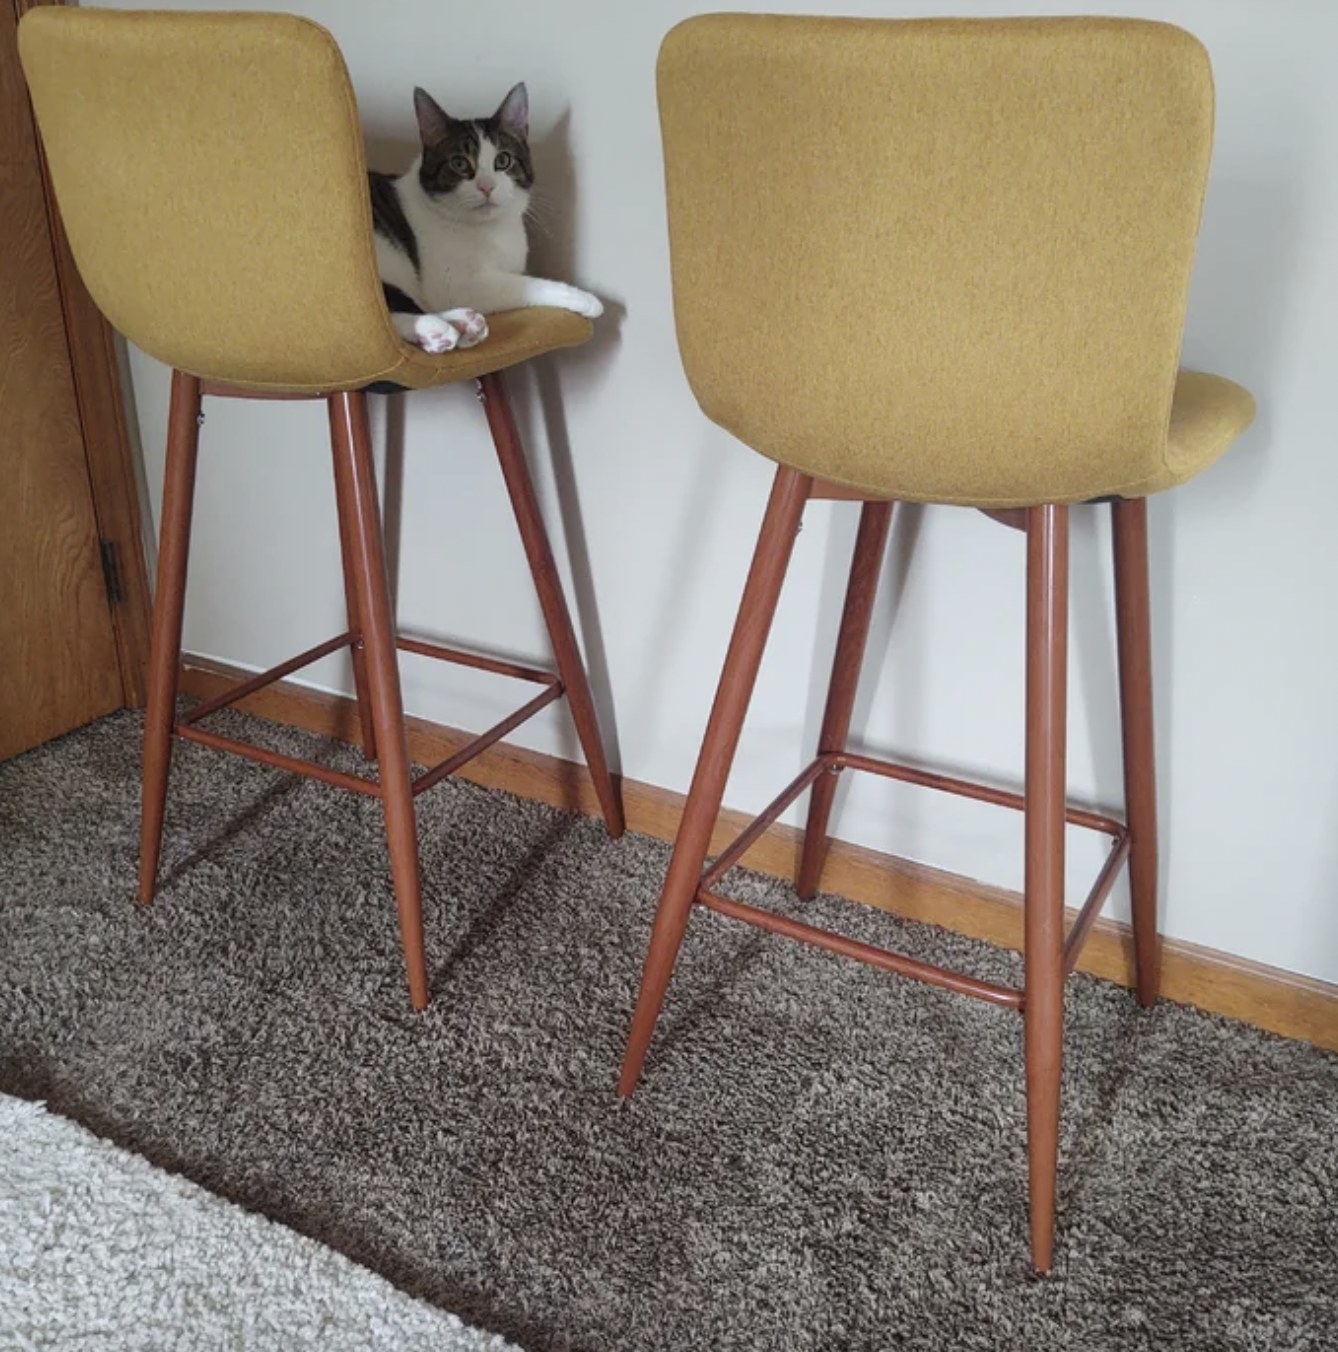 Two bar stools